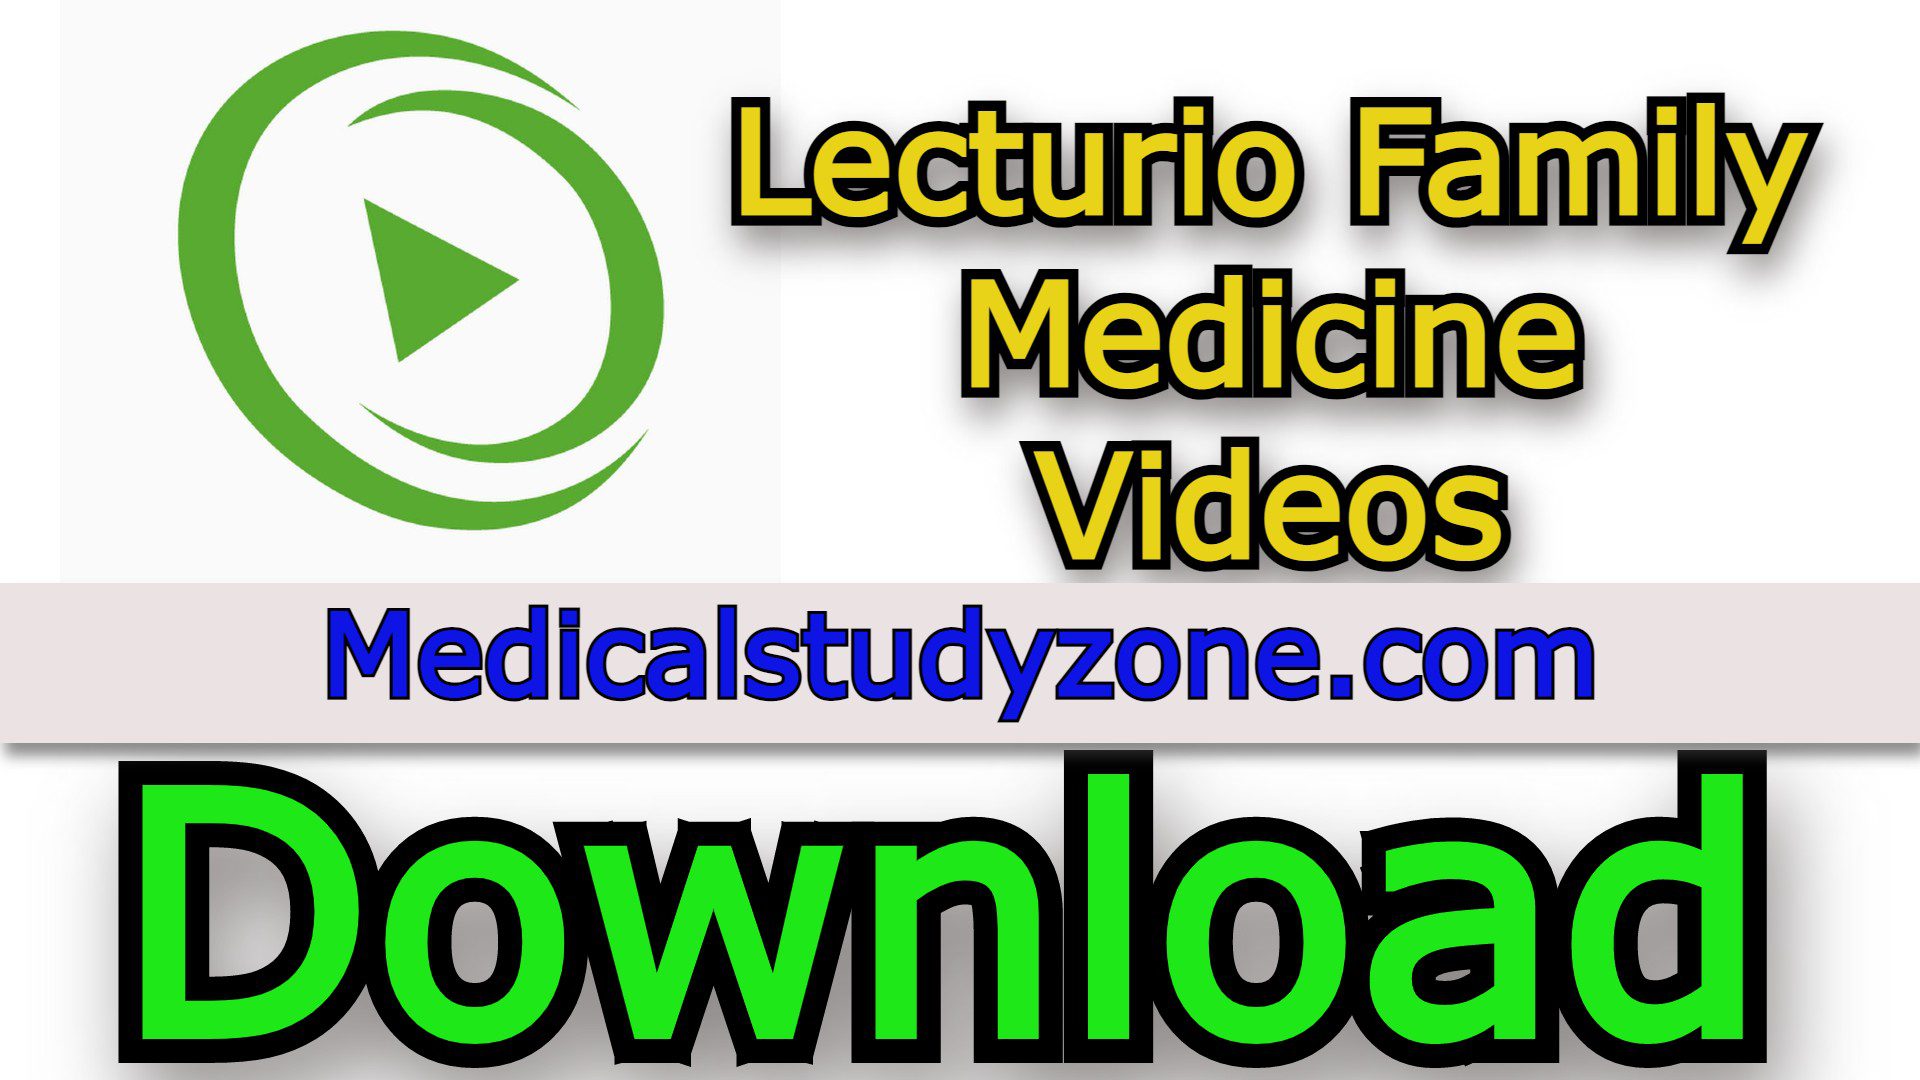 Lecturio Family Medicine Videos 2022 Free Download